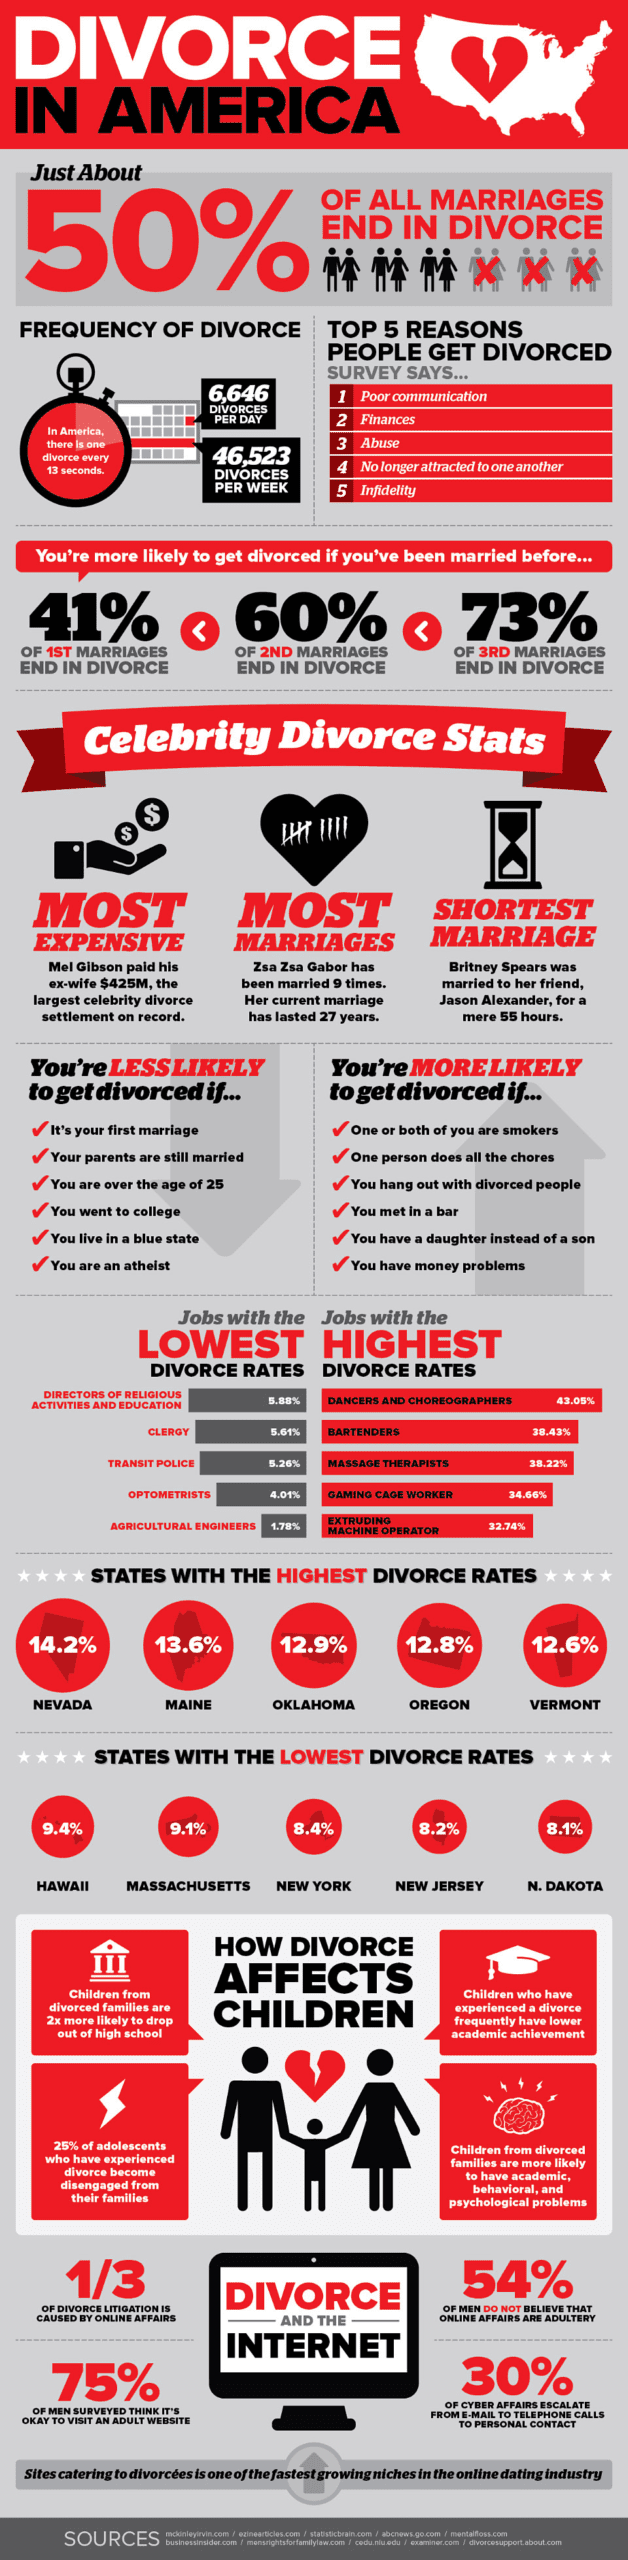 divorce infographic 2012